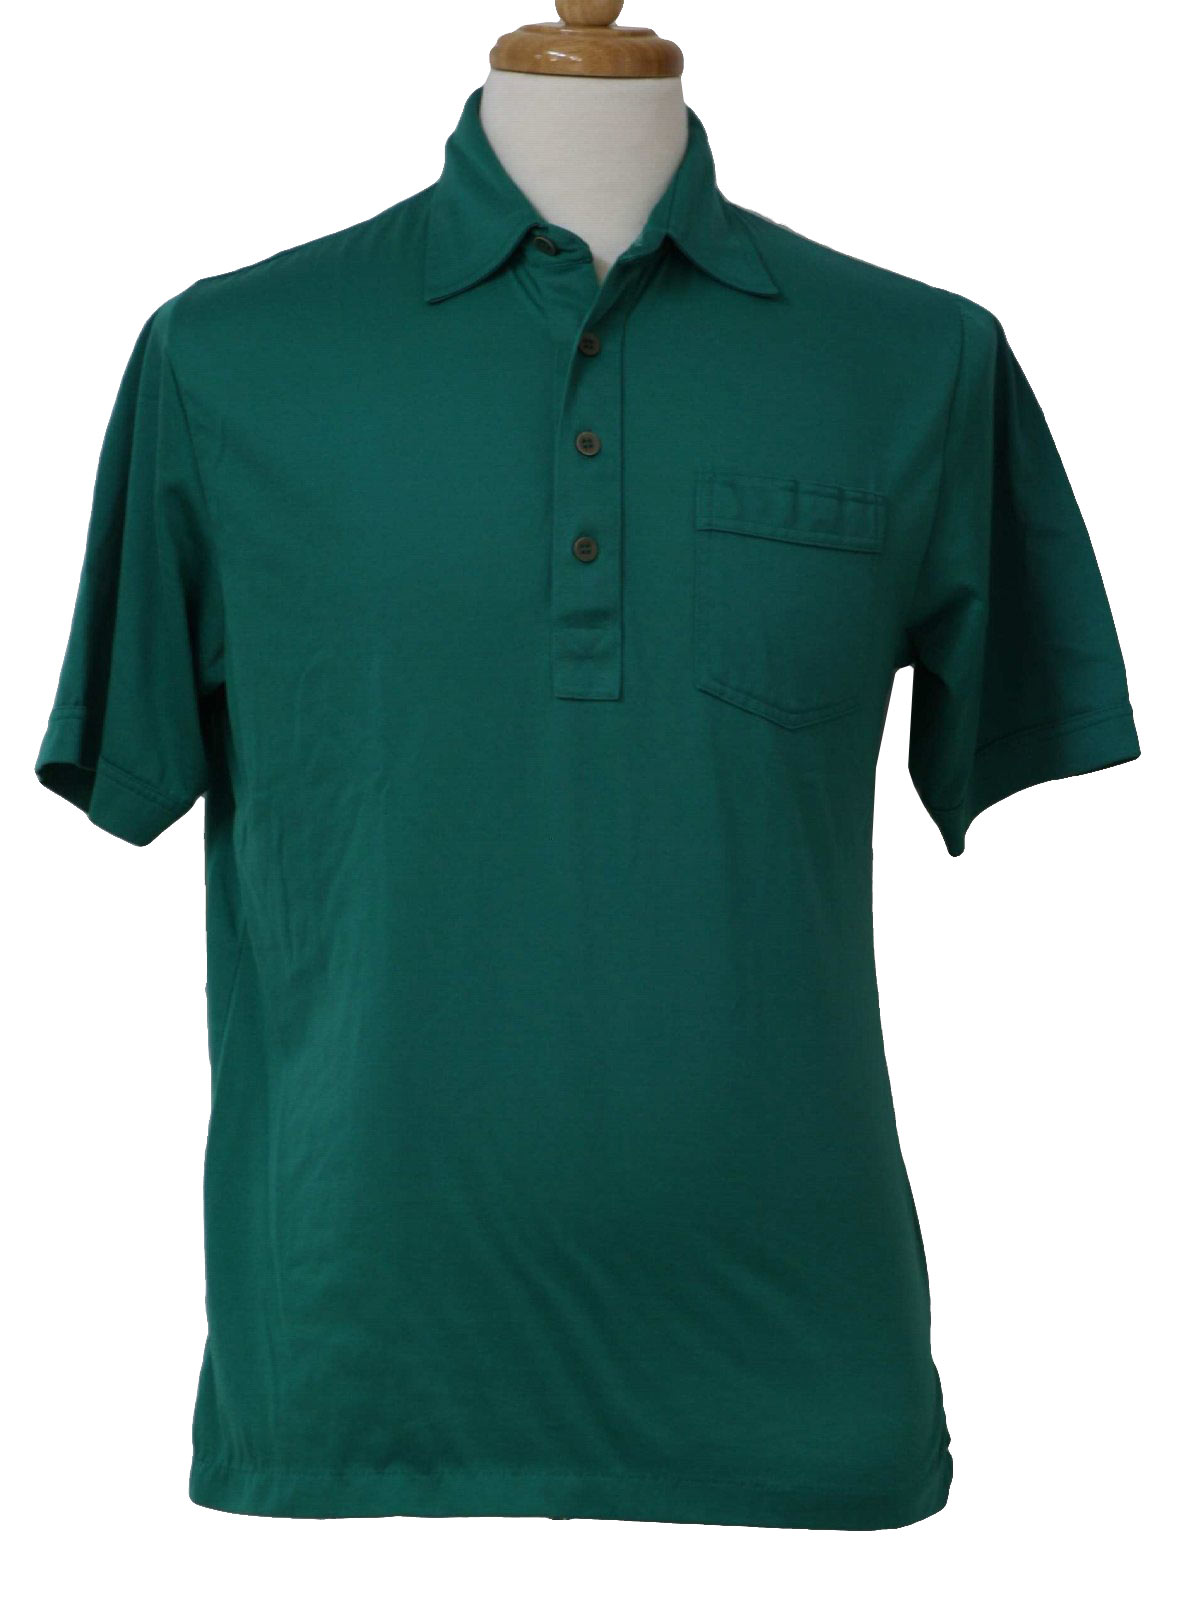 Cougar Golf Eighties Vintage Shirt: 80s -Cougar Golf- Mens green ...